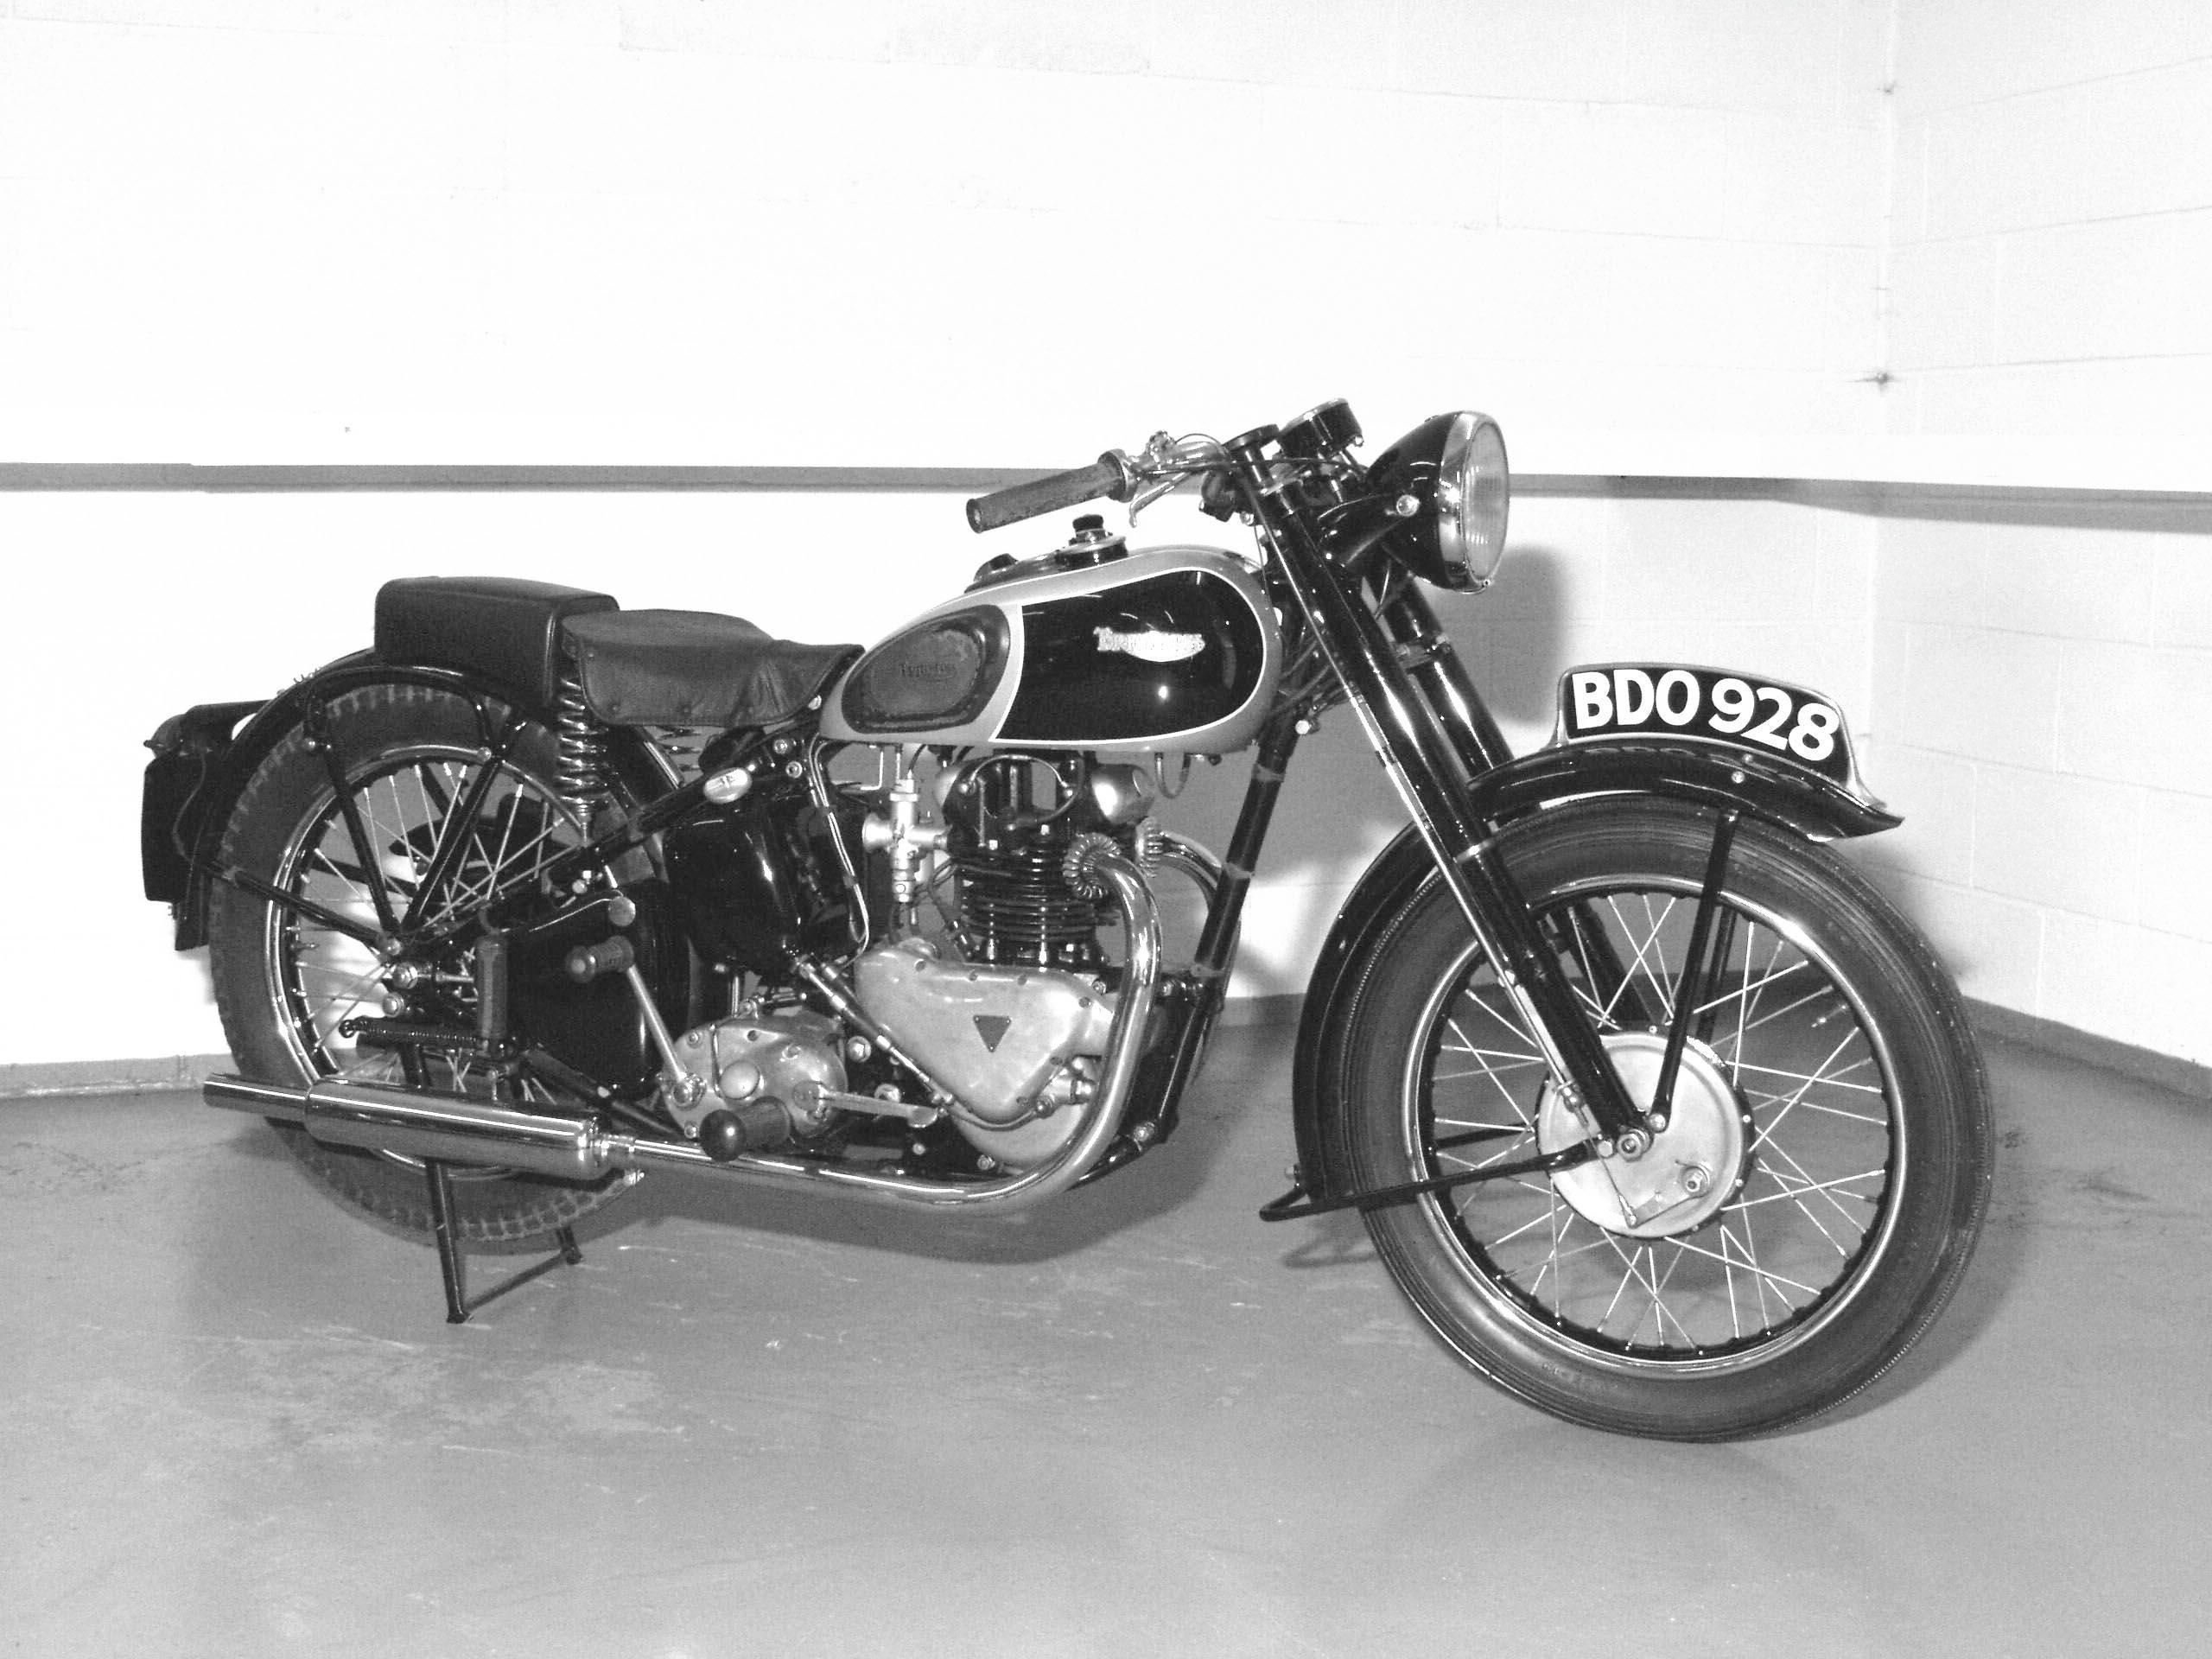 1947-triumph-349cc-model-3t-registration-no-bdo-928-chassis-no-tg